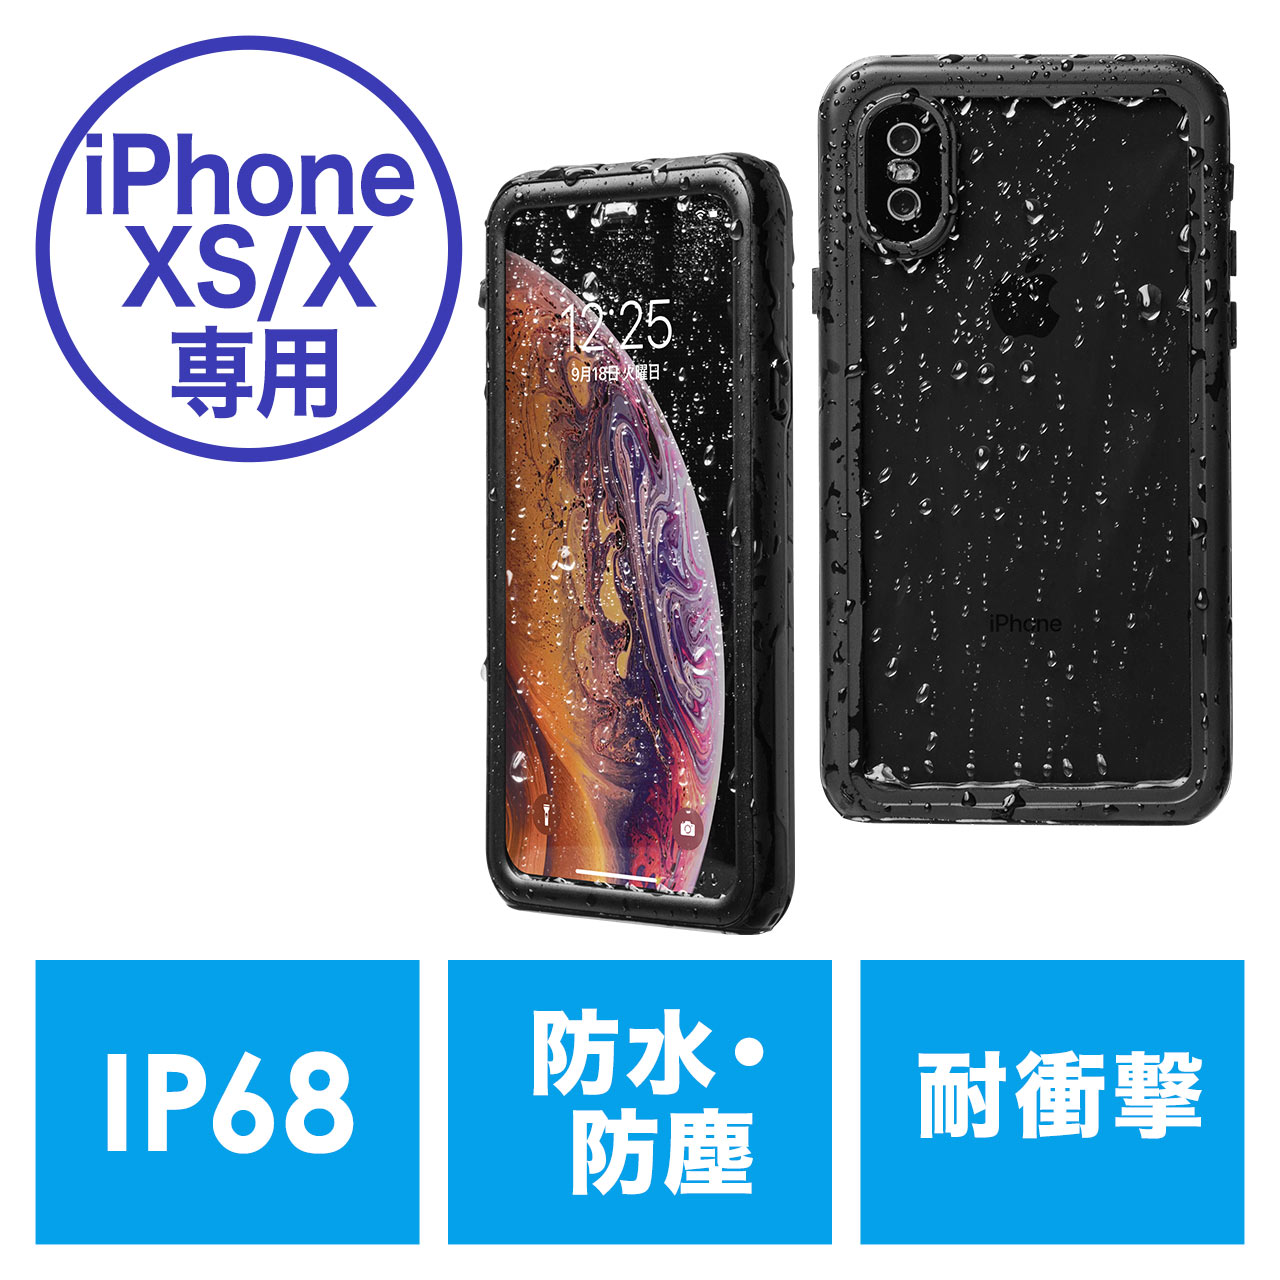 Iphone Xs Iphone X防水耐衝撃ハードケース Ip68 Qi充電対応 ストラップ付 0 Spc027wpの通販ならサンワダイレクト